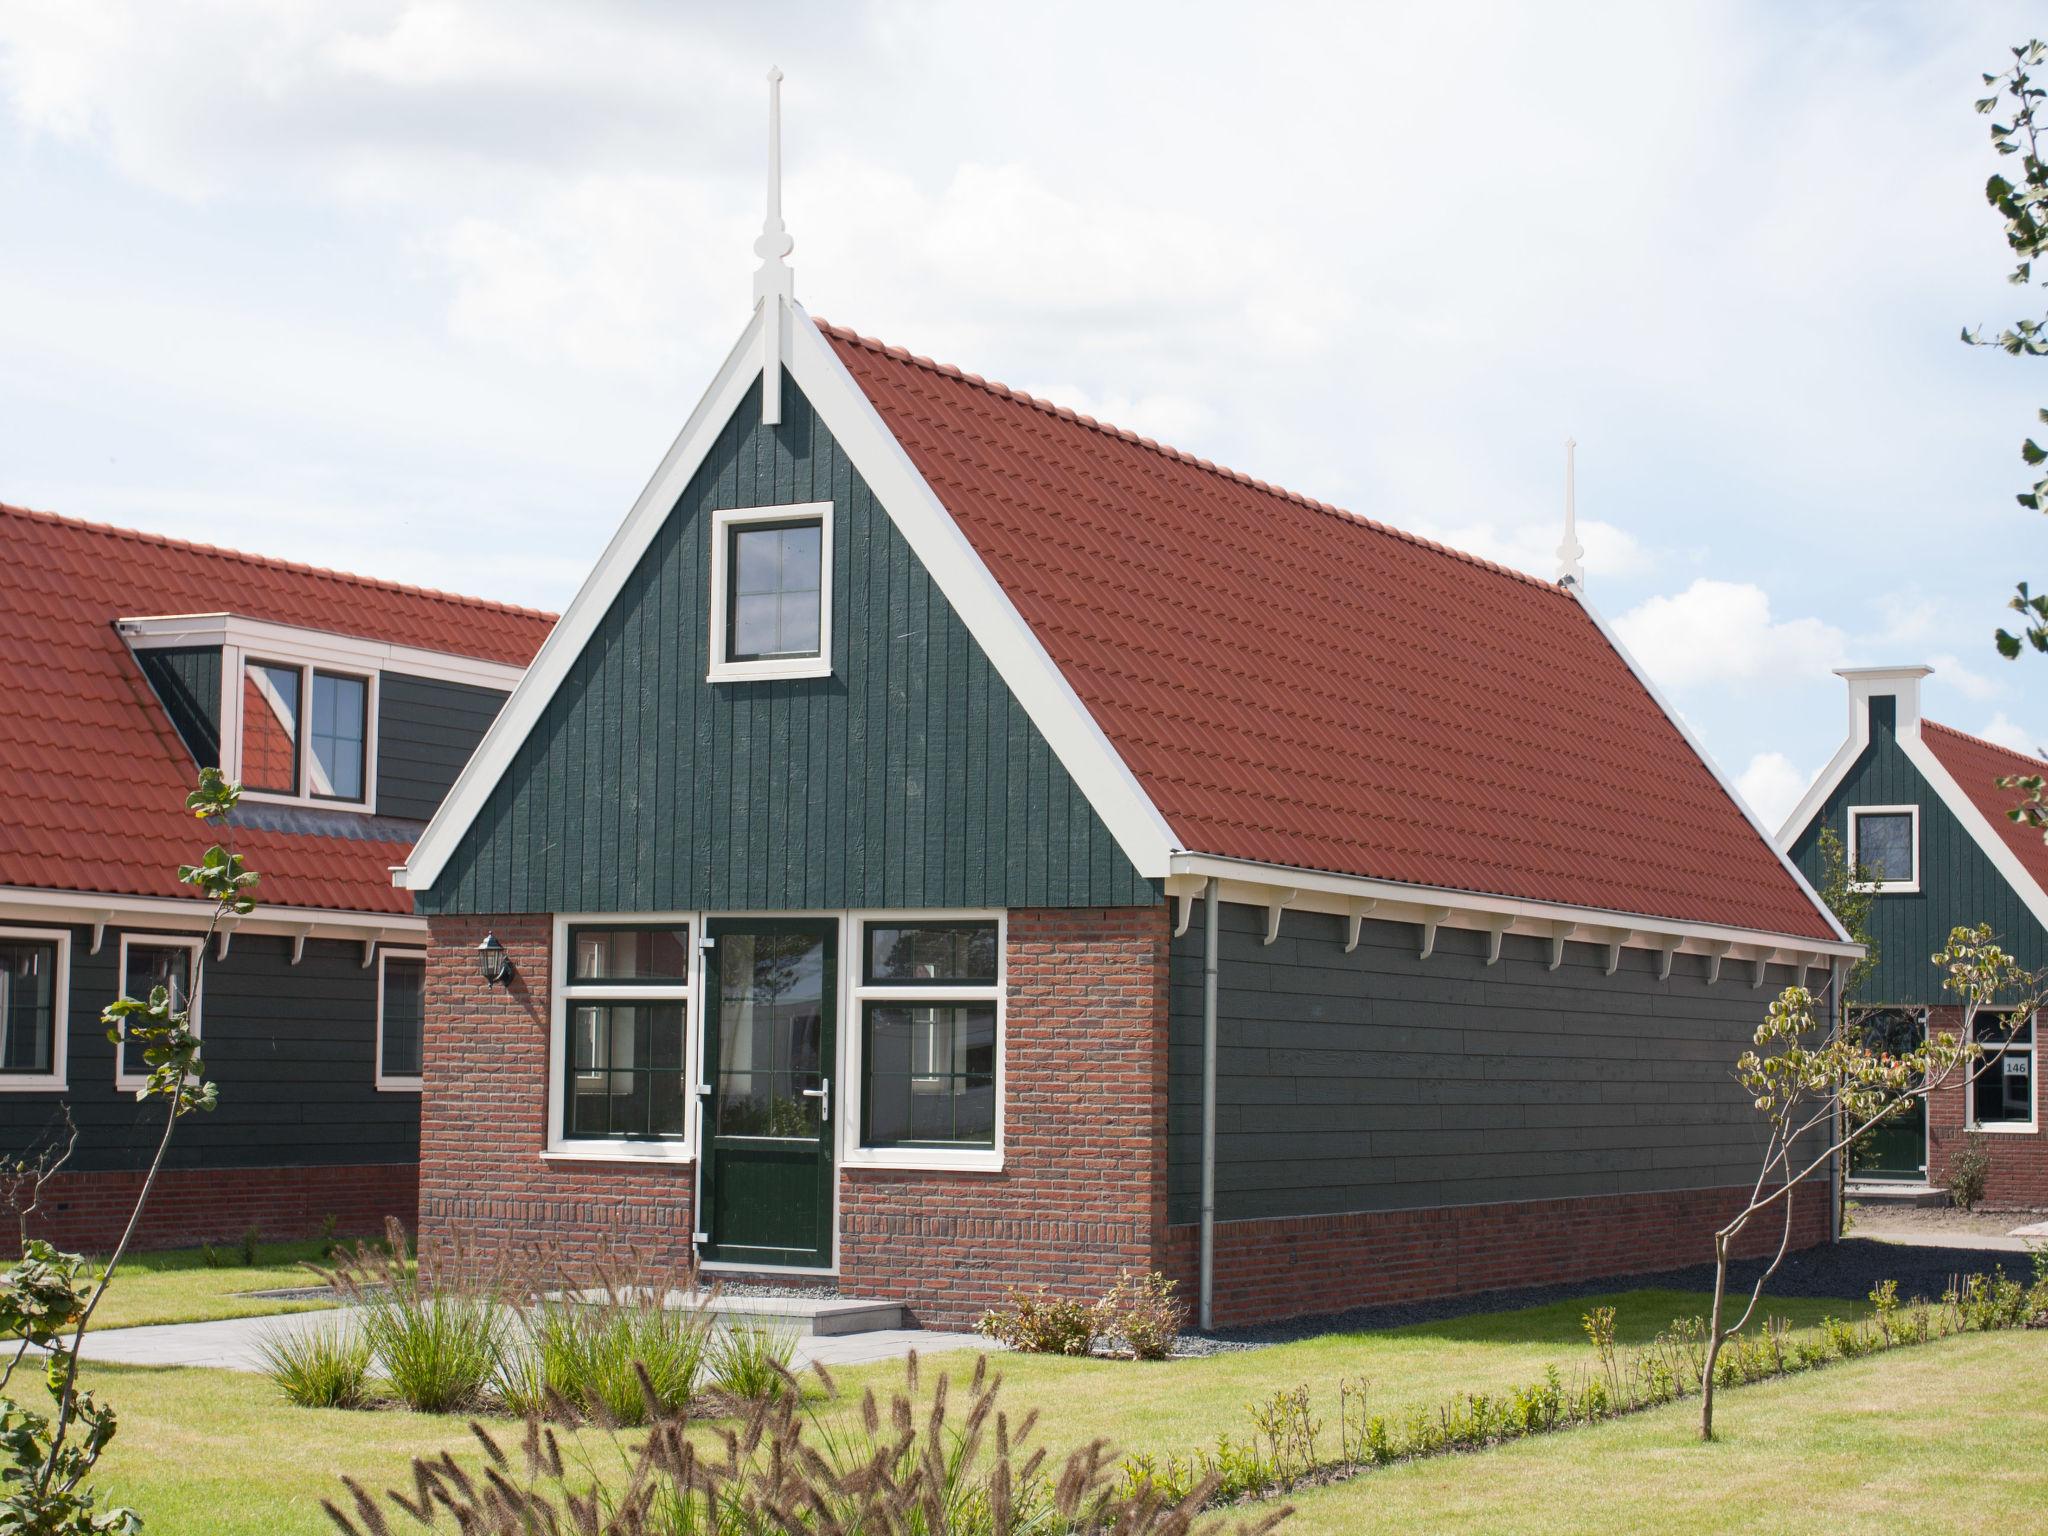 Photo 1 - 3 bedroom House in West-Graftdijk with terrace